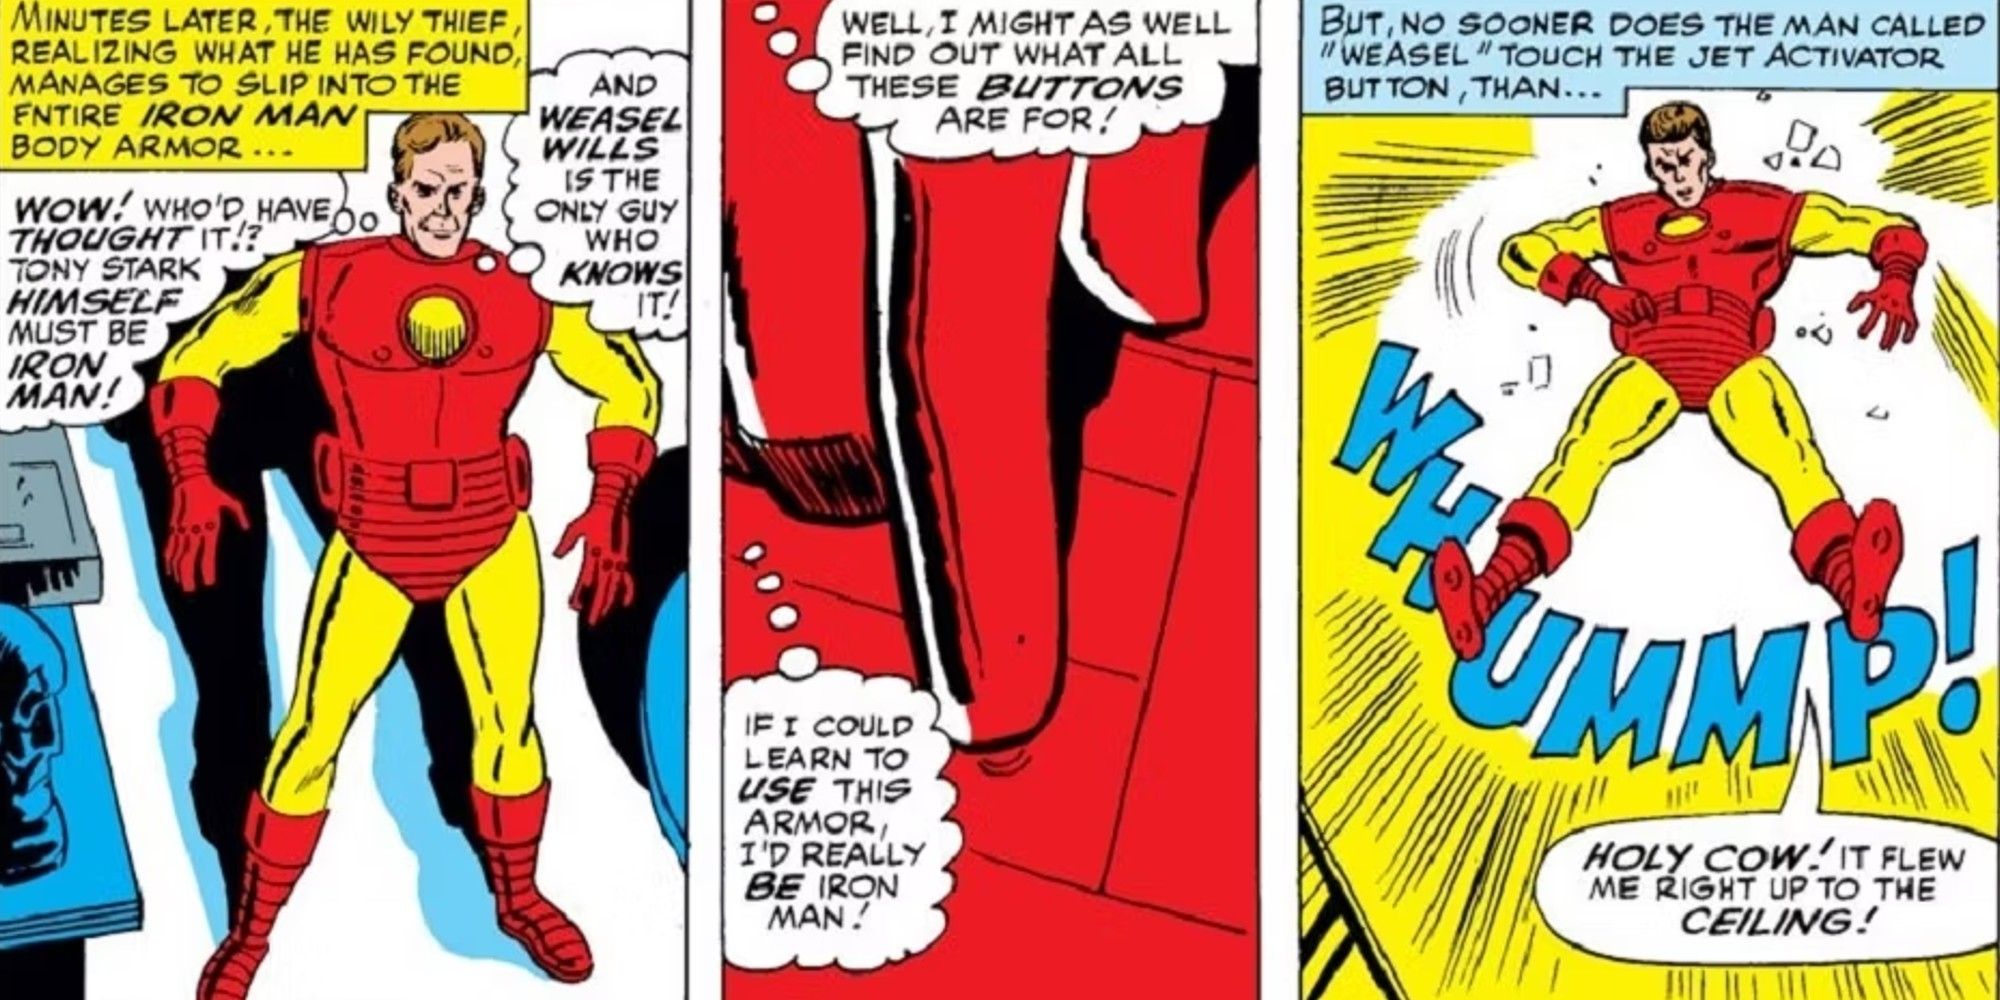 Weasel Willis steals Iron Man's Armor